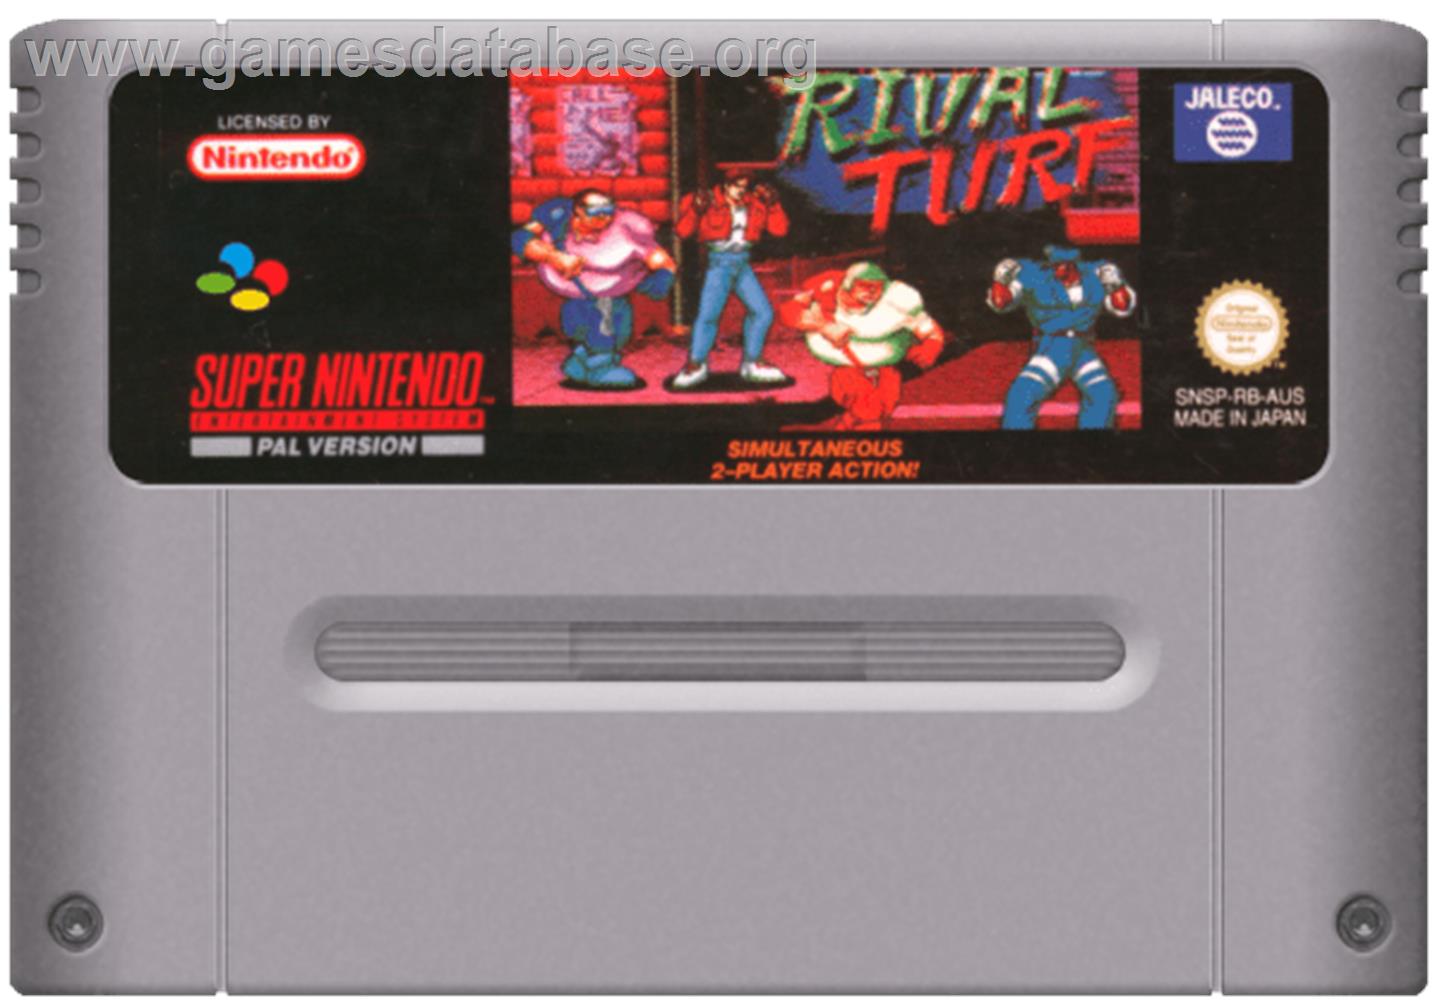 Rival Turf - Nintendo SNES - Artwork - Cartridge